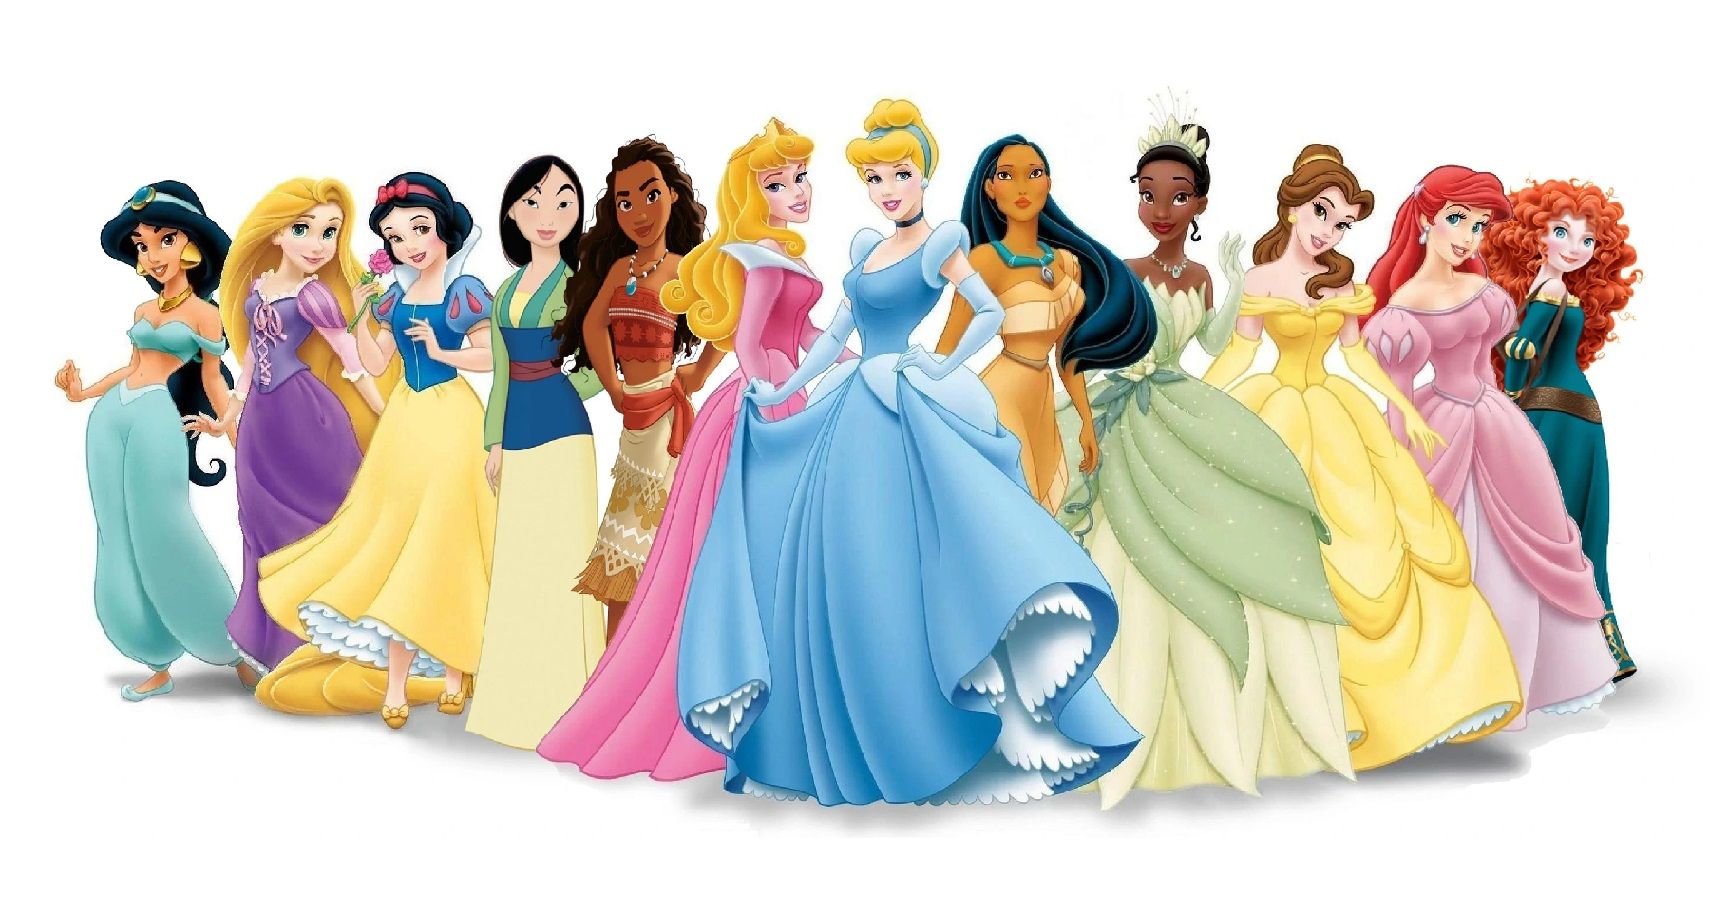 https://static1.srcdn.com/wordpress/wp-content/uploads/2020/03/Disney-Princess-Feature-Image.jpg